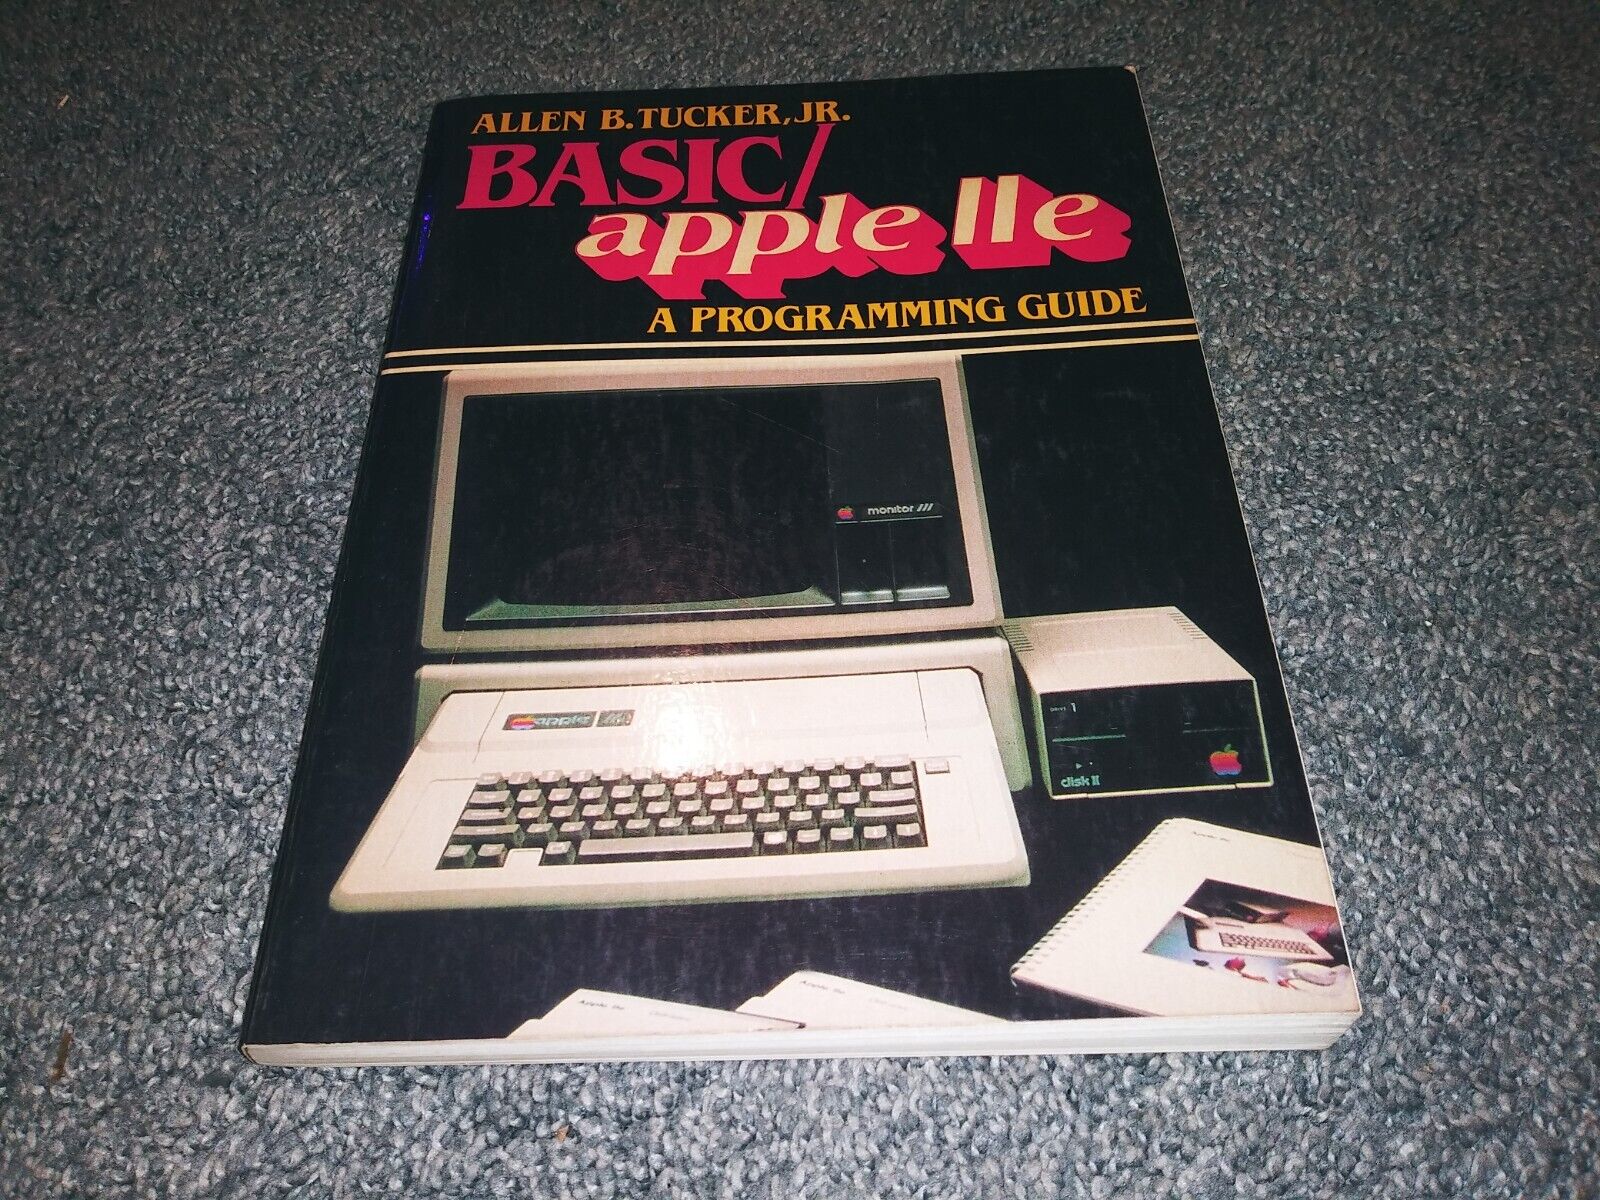 Basic Apple IIe a Programing Guide Allen B. Tucker Jr. Vintage Manual